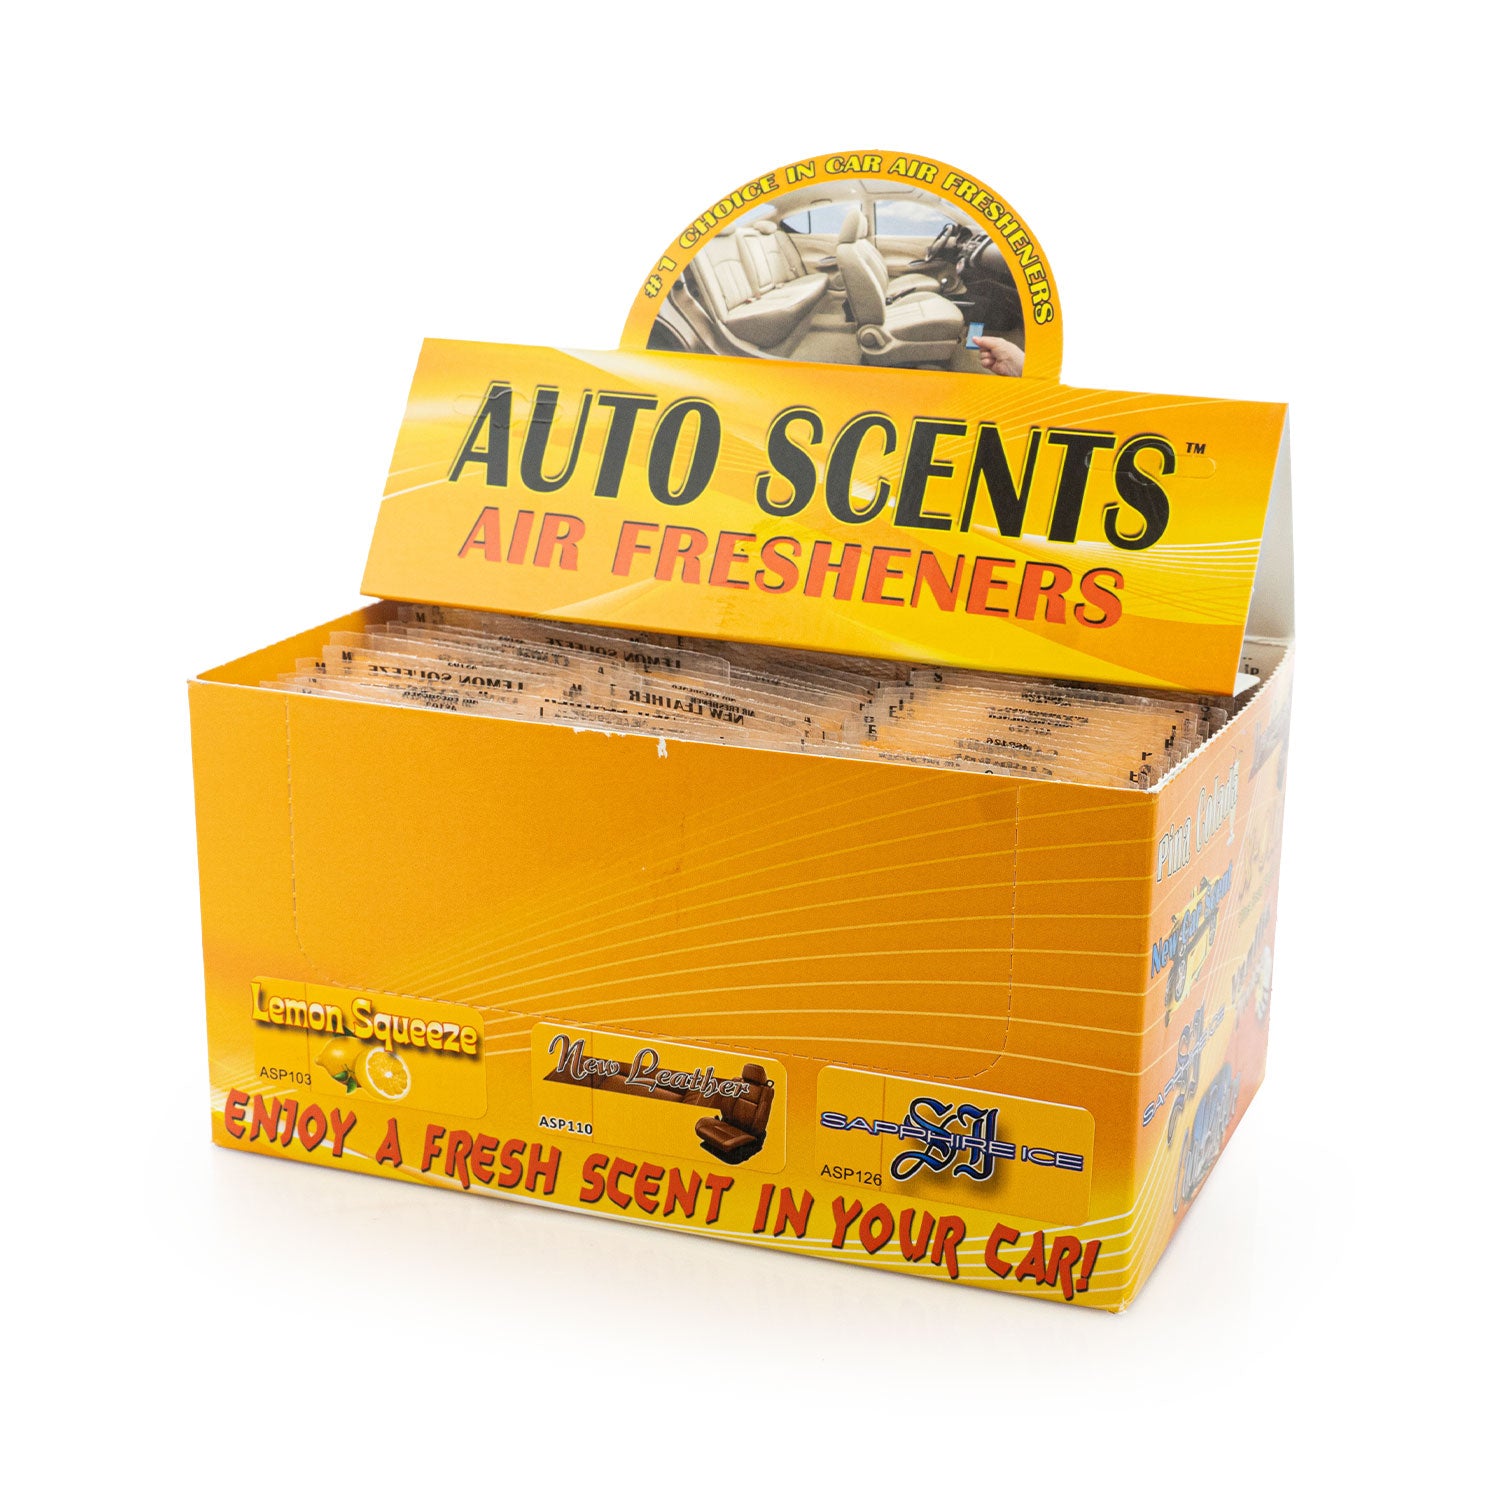 auto-scents-air-freshener-display-box